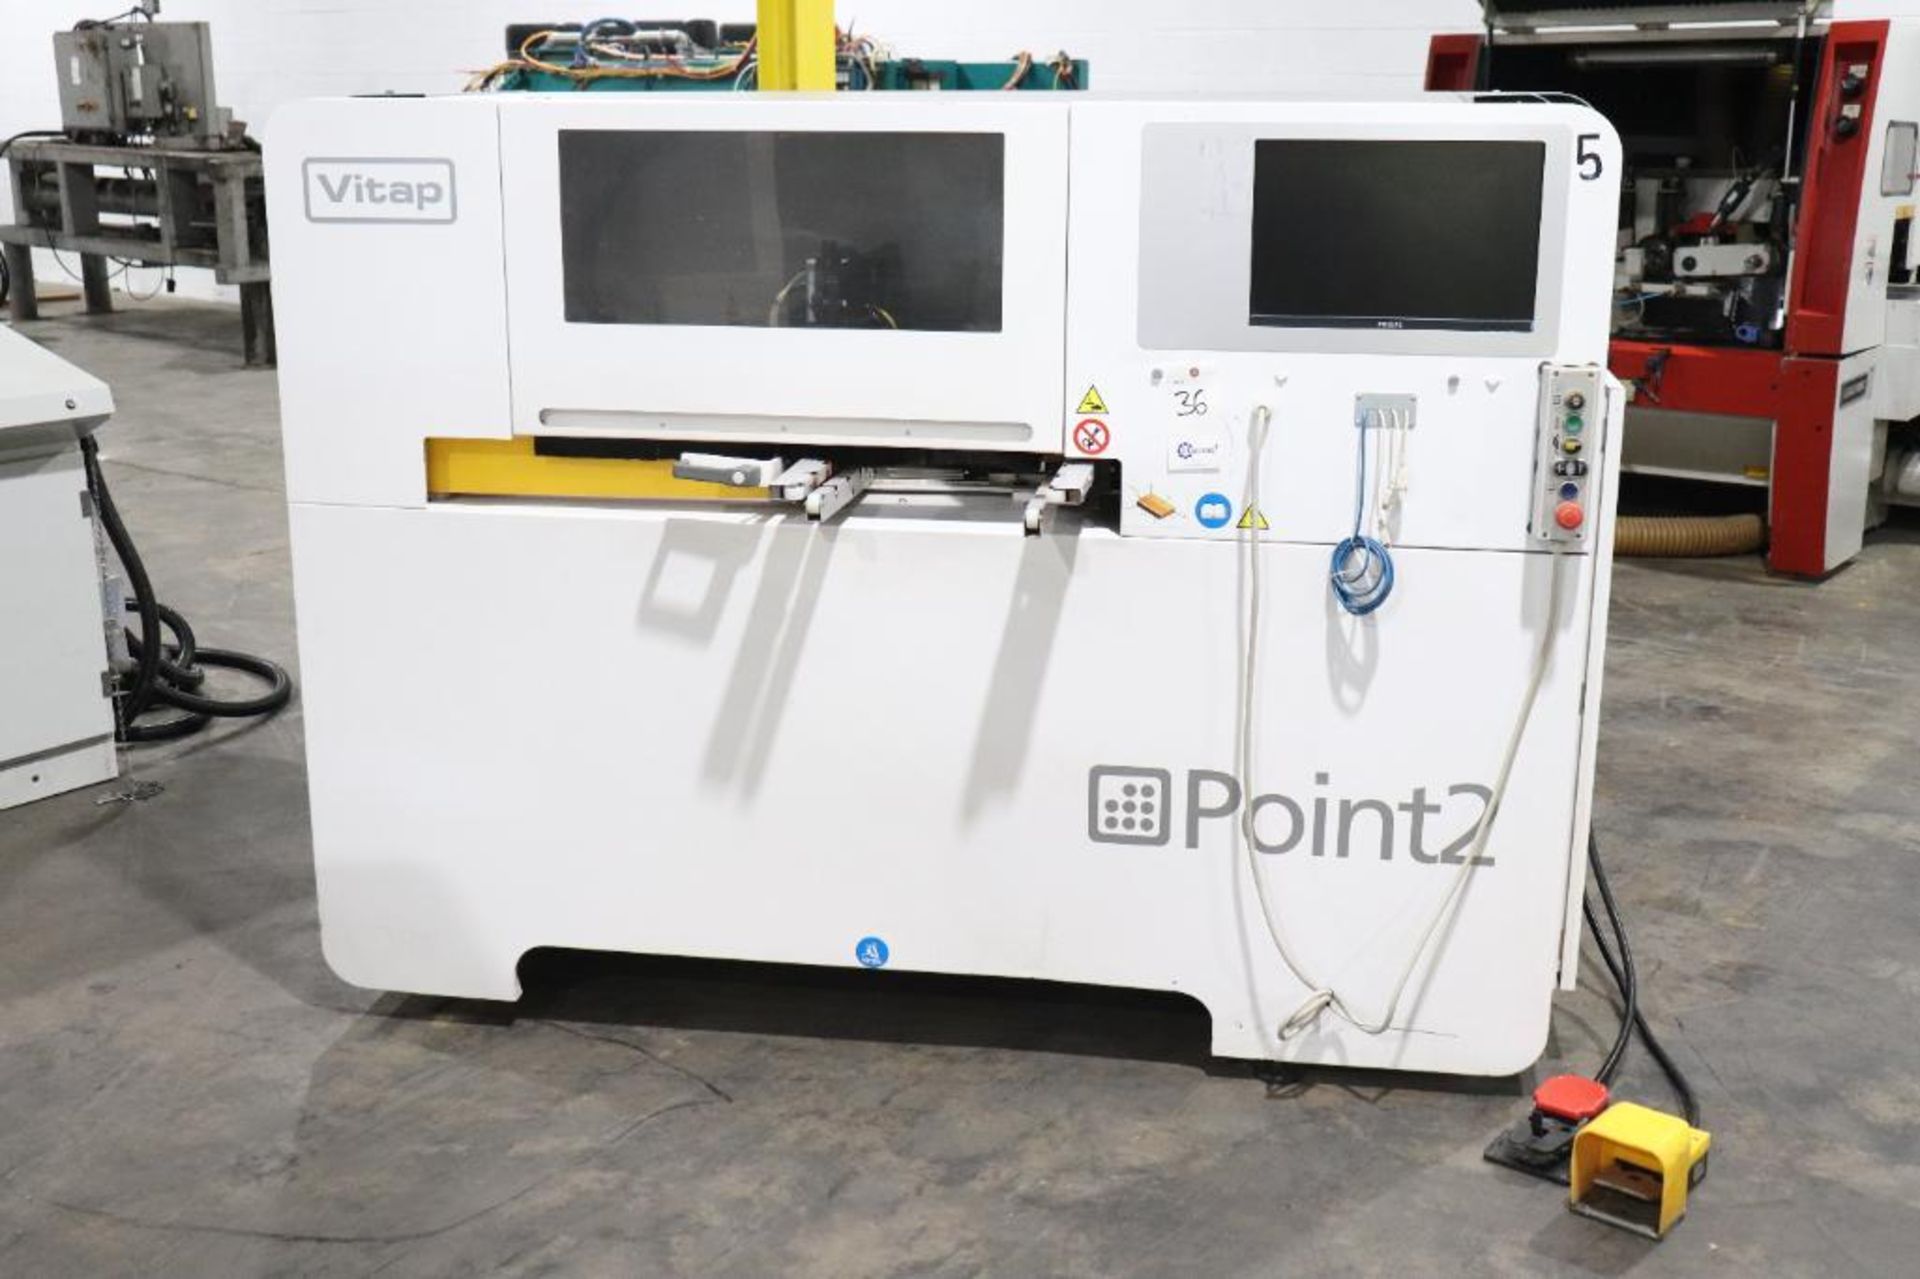 Vitap Point 2 CNC Boring Machine